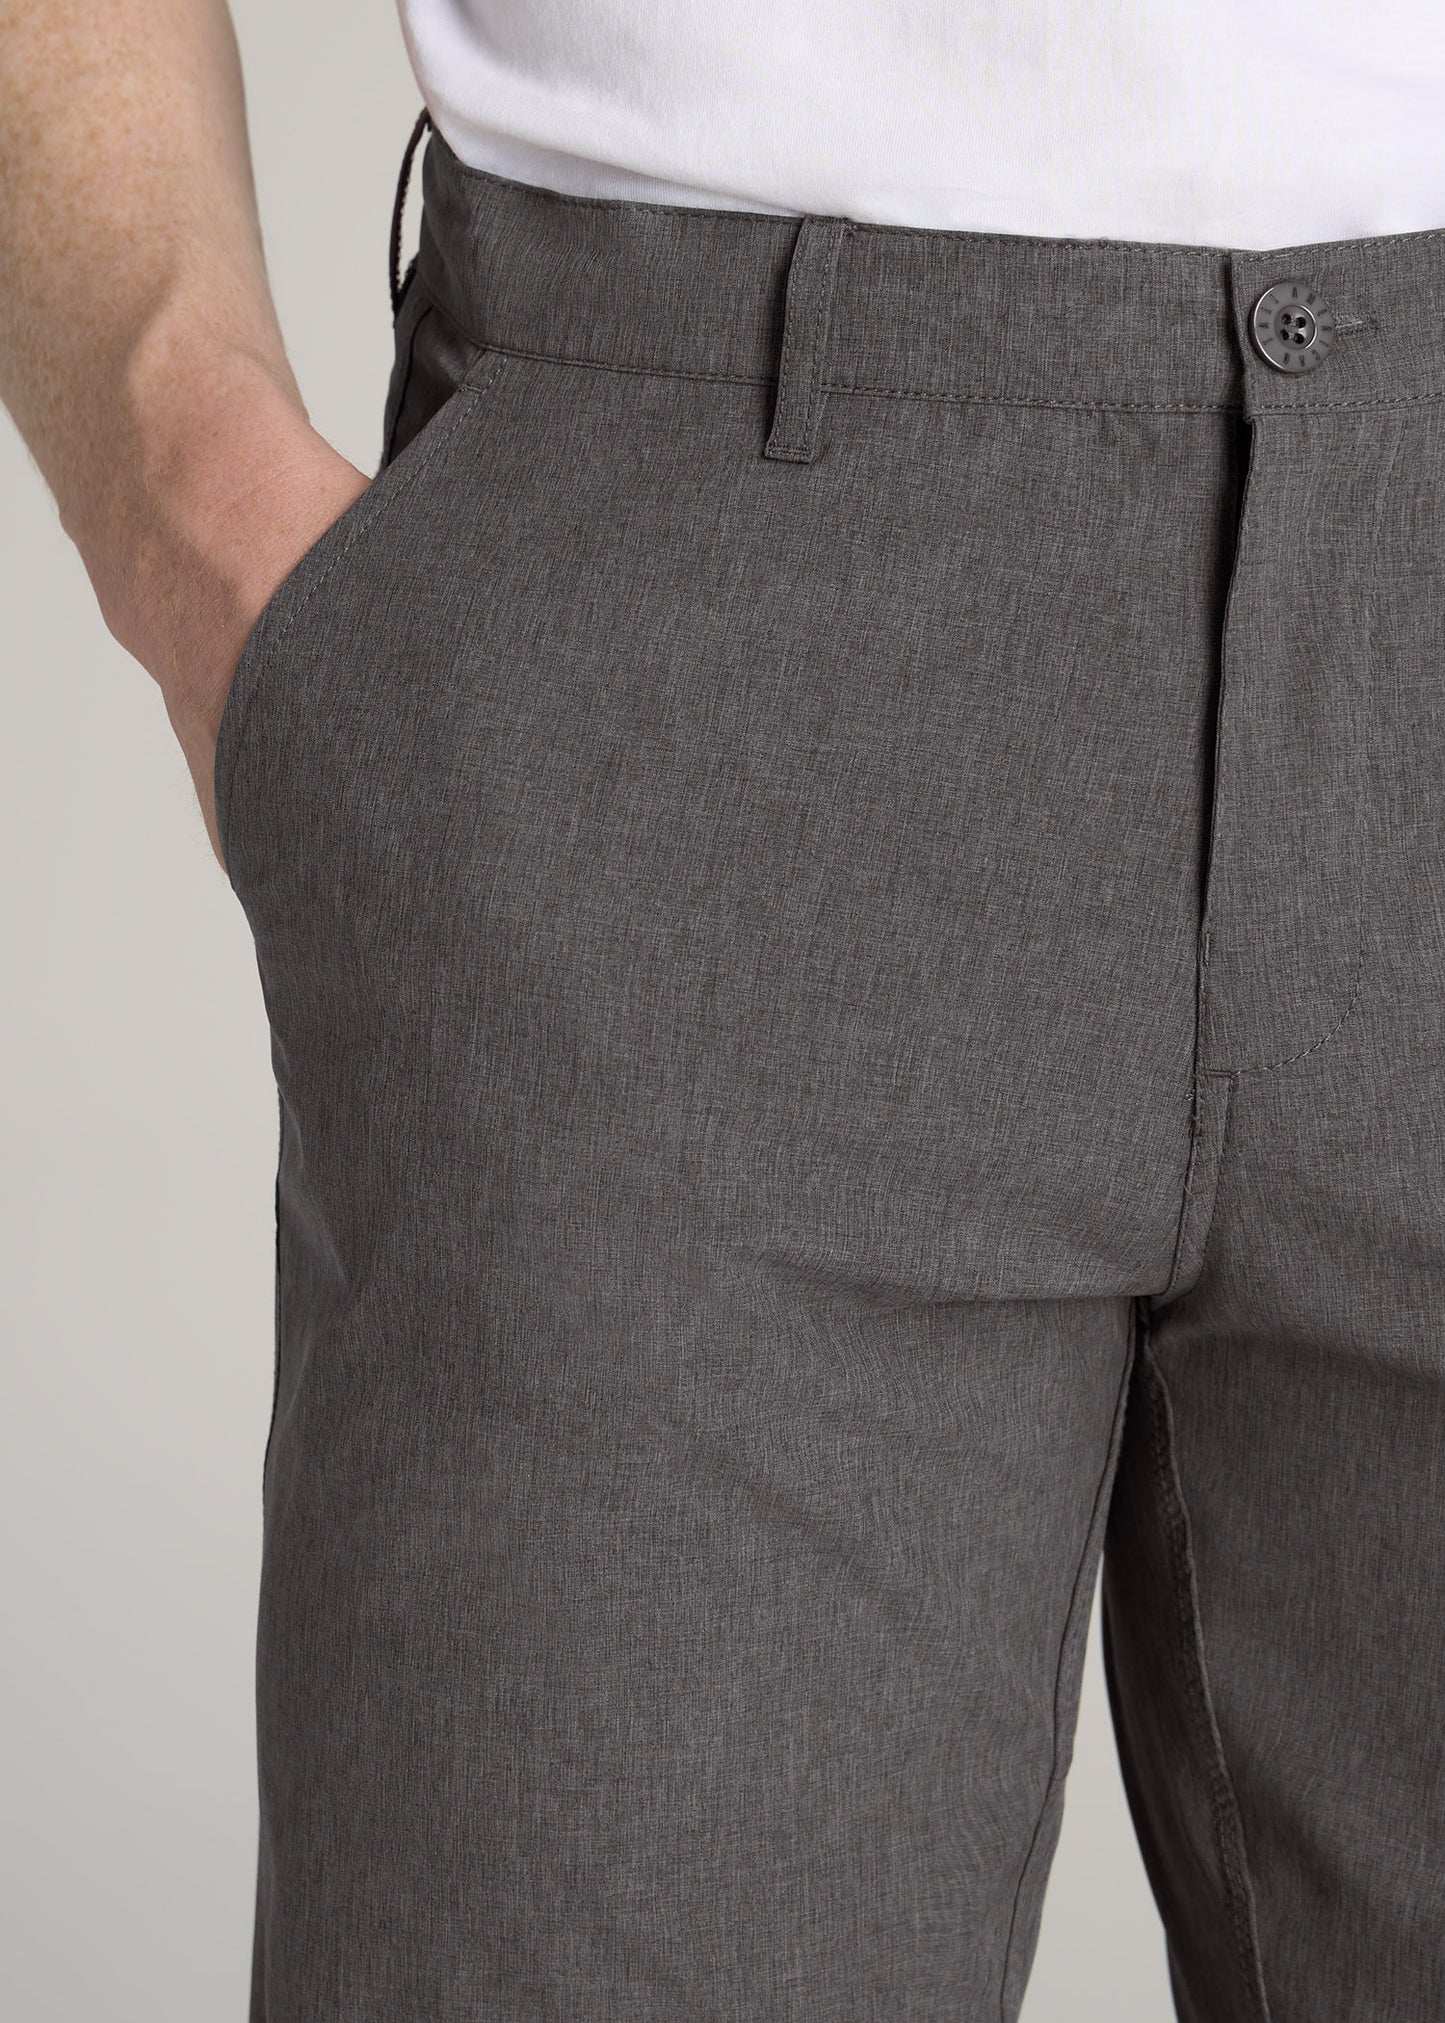         American-Tall-Men-Hybrid-Shorts-Charcoal-Mix-detail